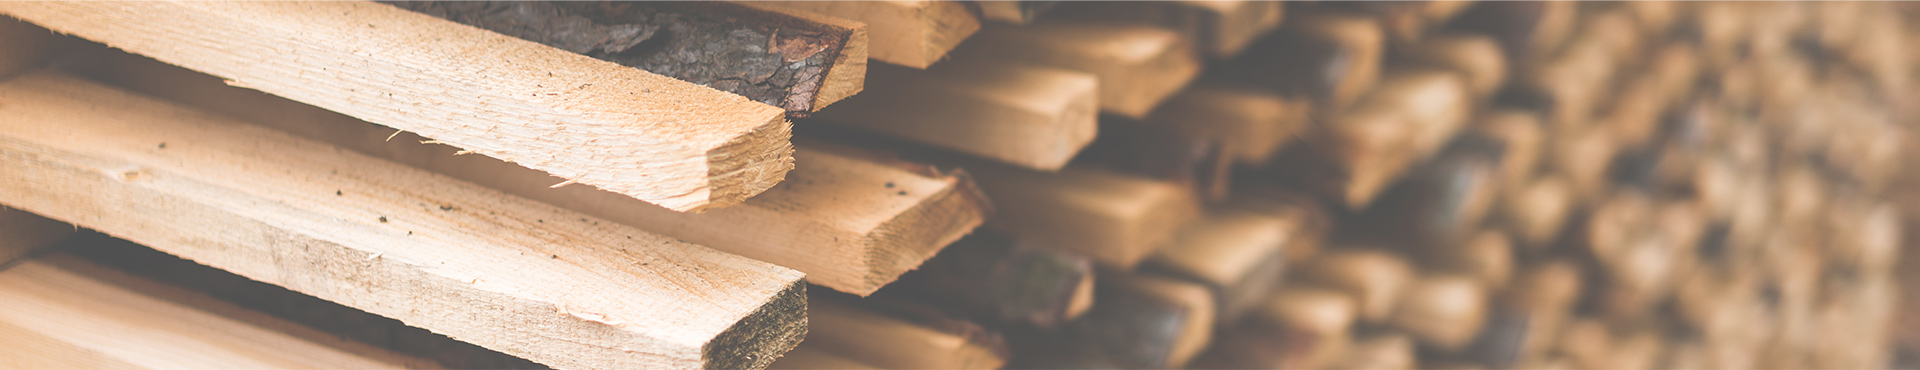 Klumb Lumber news